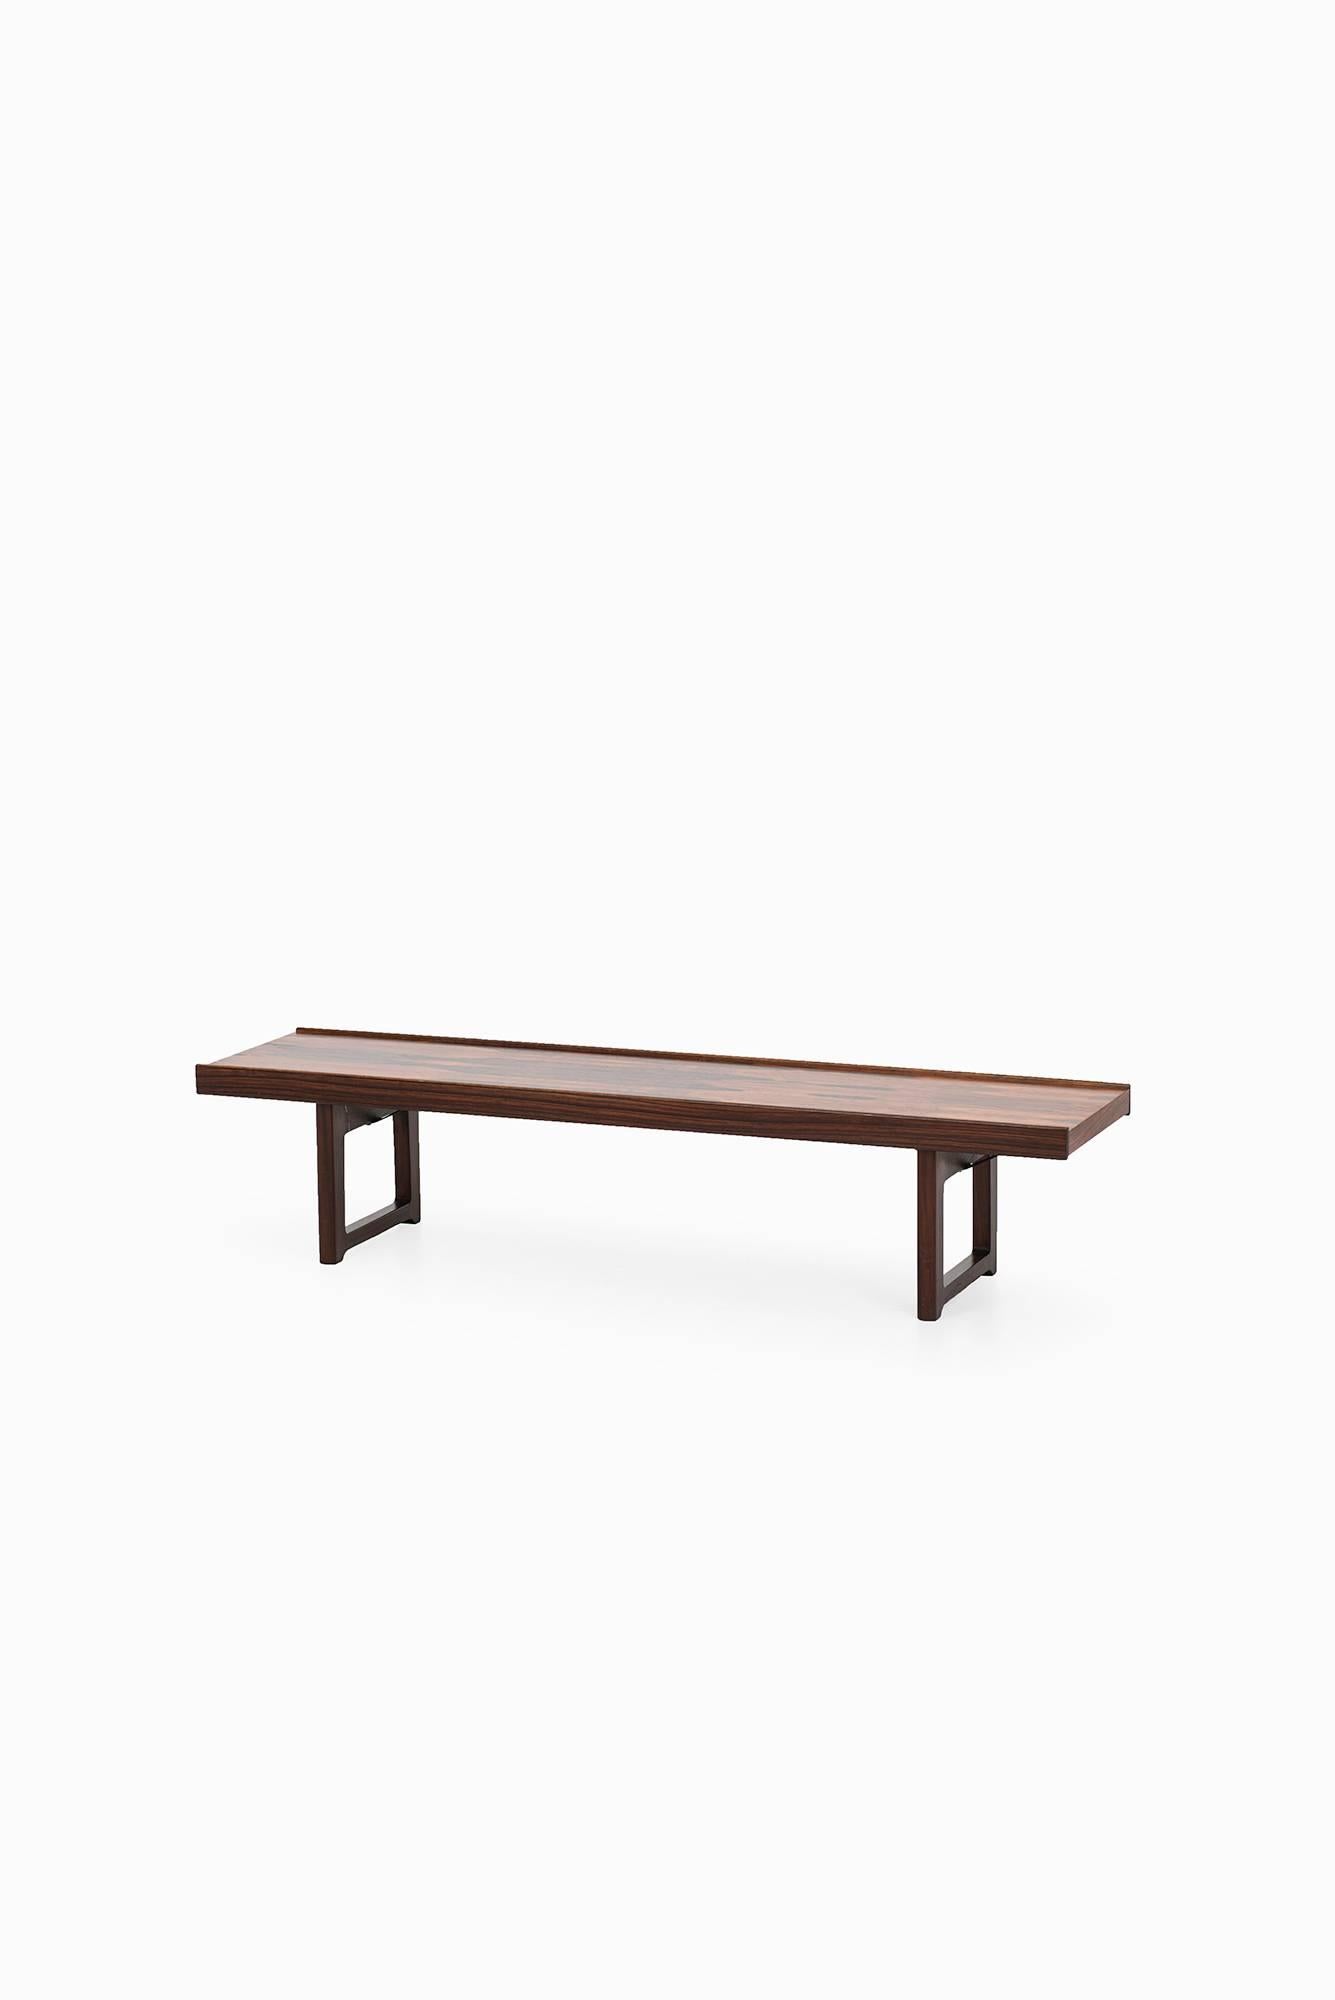 Bench / side table model Krobo in rosewood designed by Torbjørn Afdal. Produced by Bruksbo in Norway.